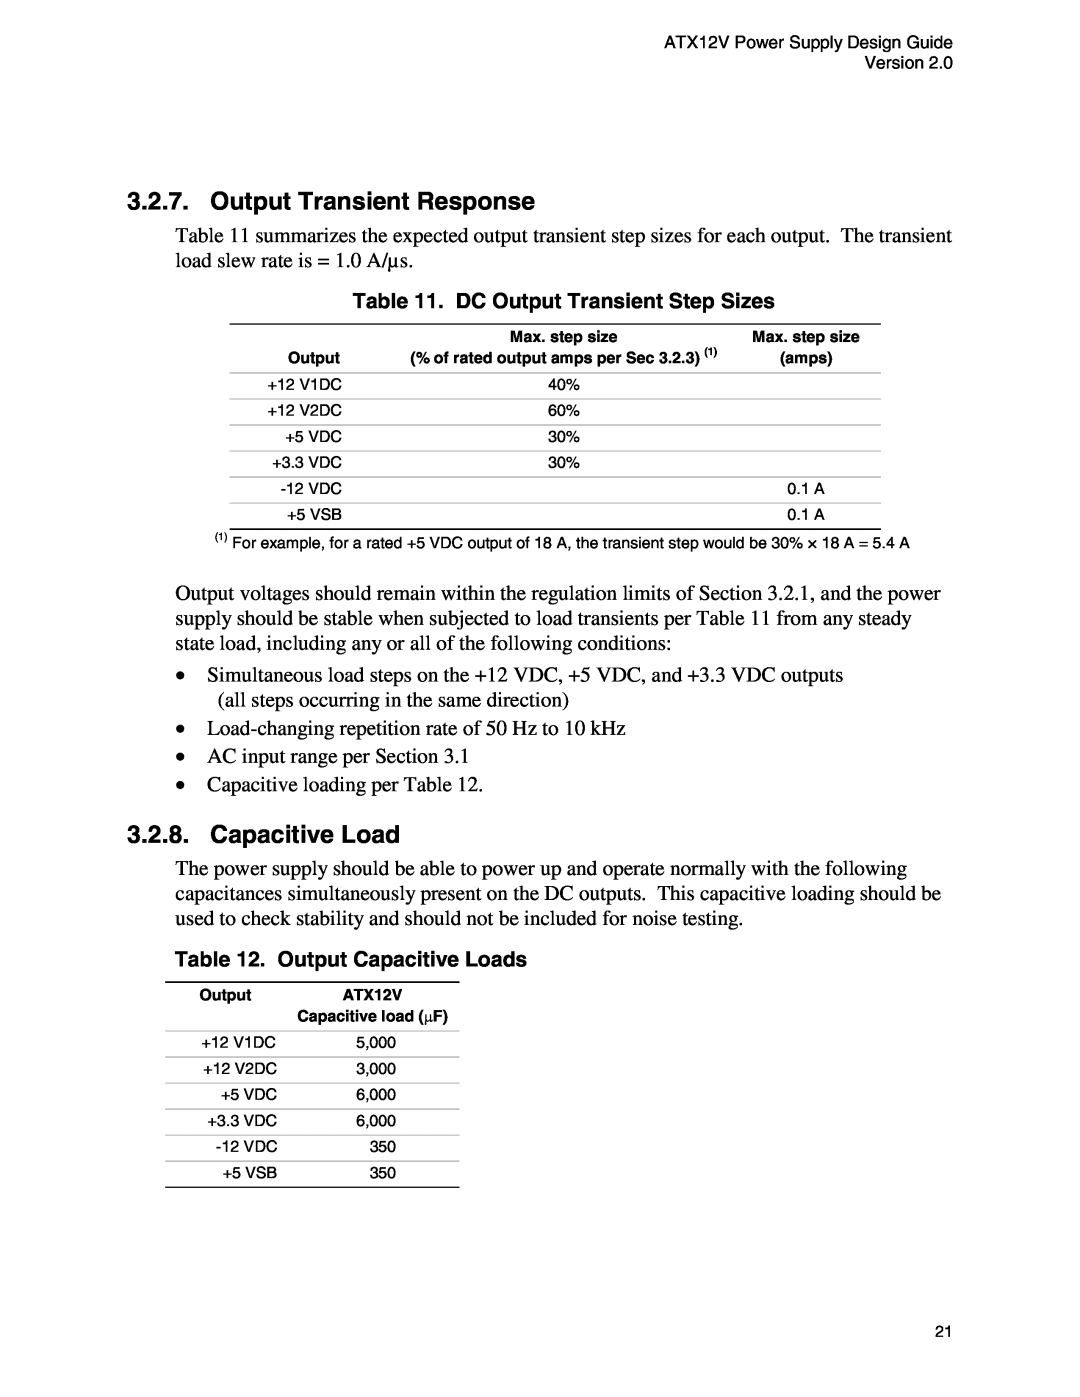 Intel ATX12V manual Output Transient Response, DC Output Transient Step Sizes, Output Capacitive Loads 